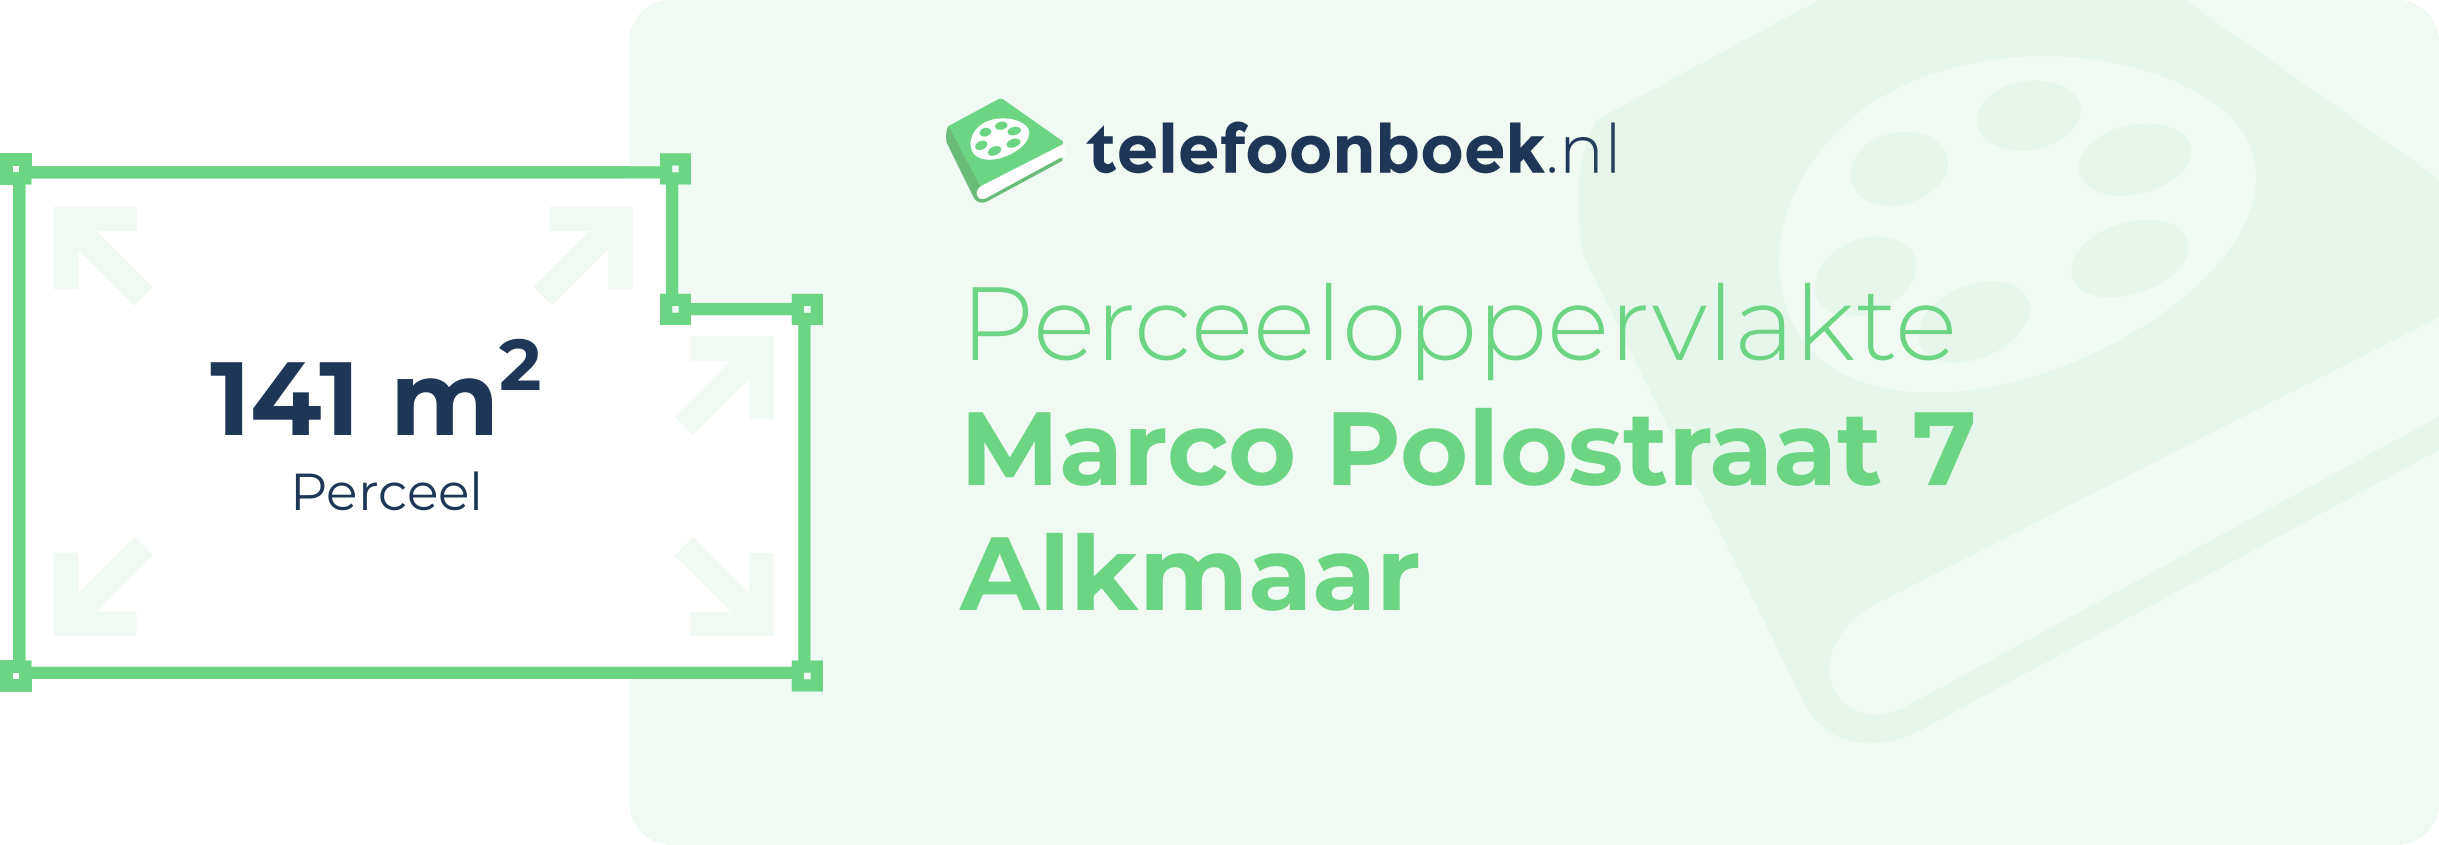 Perceeloppervlakte Marco Polostraat 7 Alkmaar